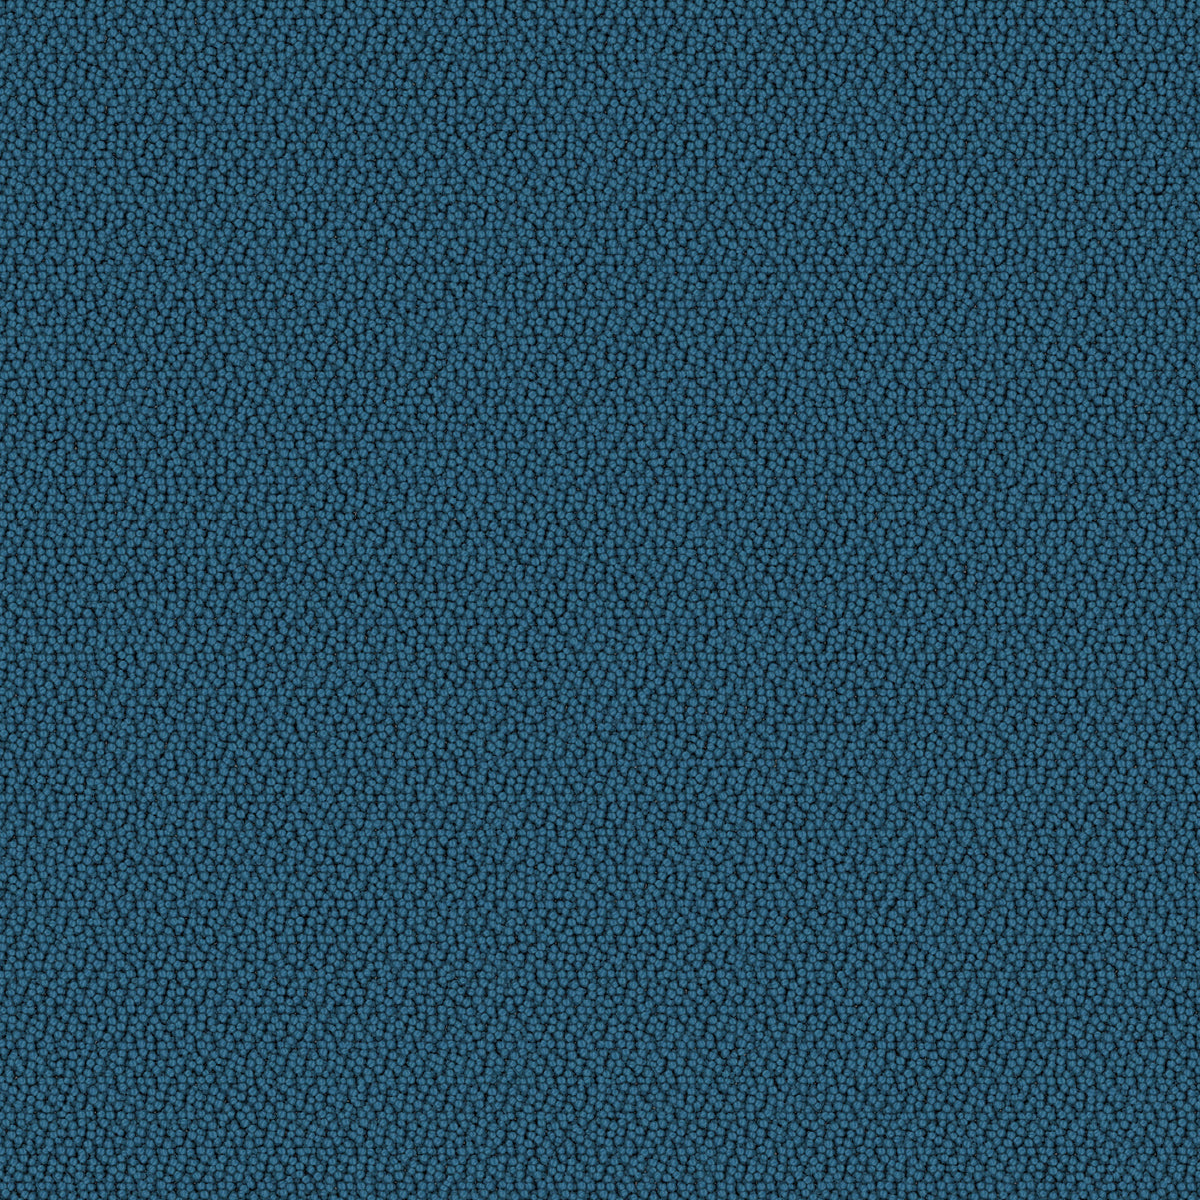 Mohawk Group - Colorbeat - Carpet Tile - Kingfisher